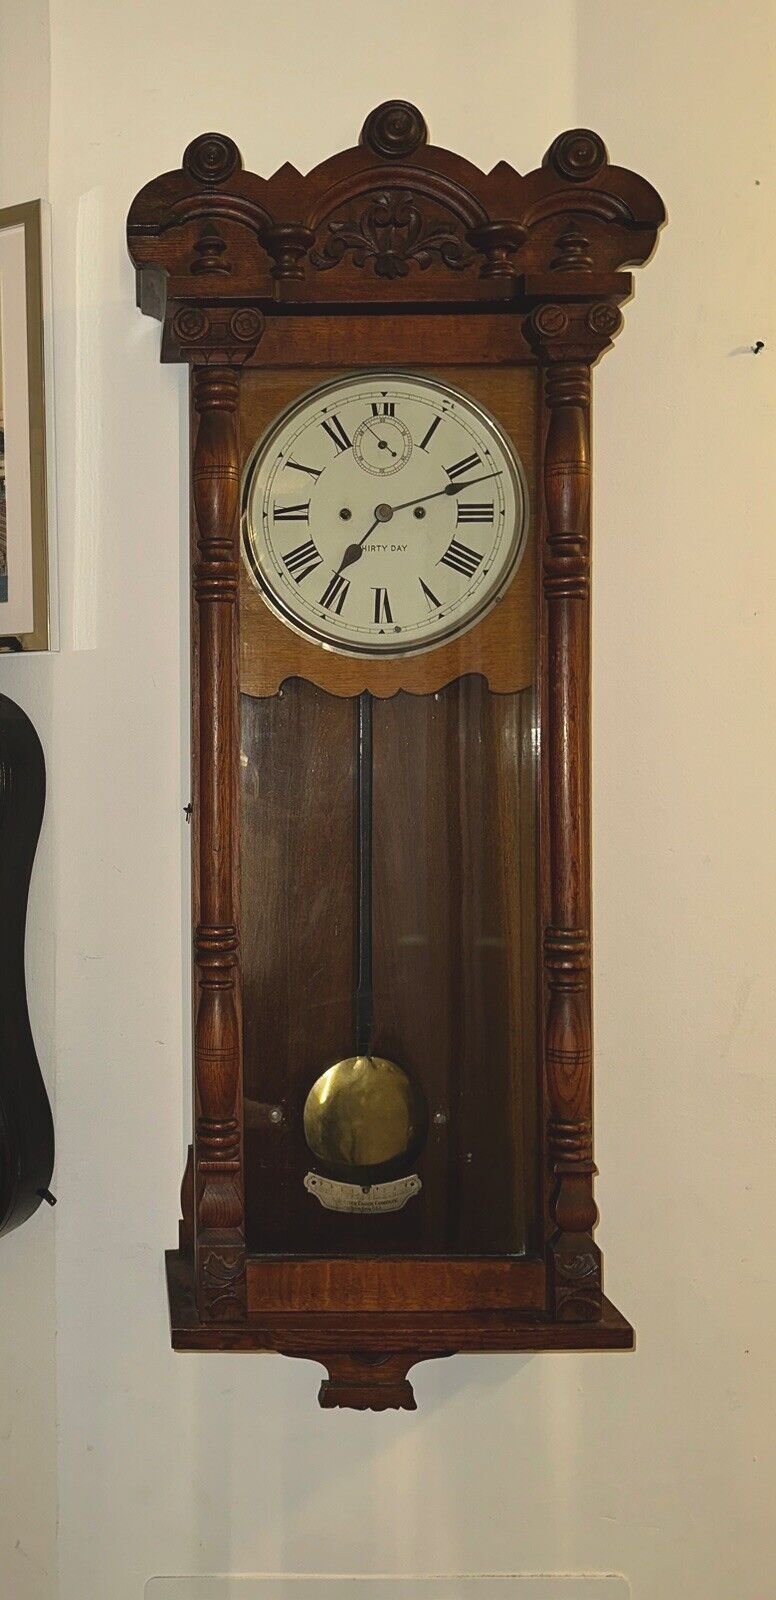 Very Large New Haven Antique 30 Day Regulator Wall Clock- “Elfrida” Model